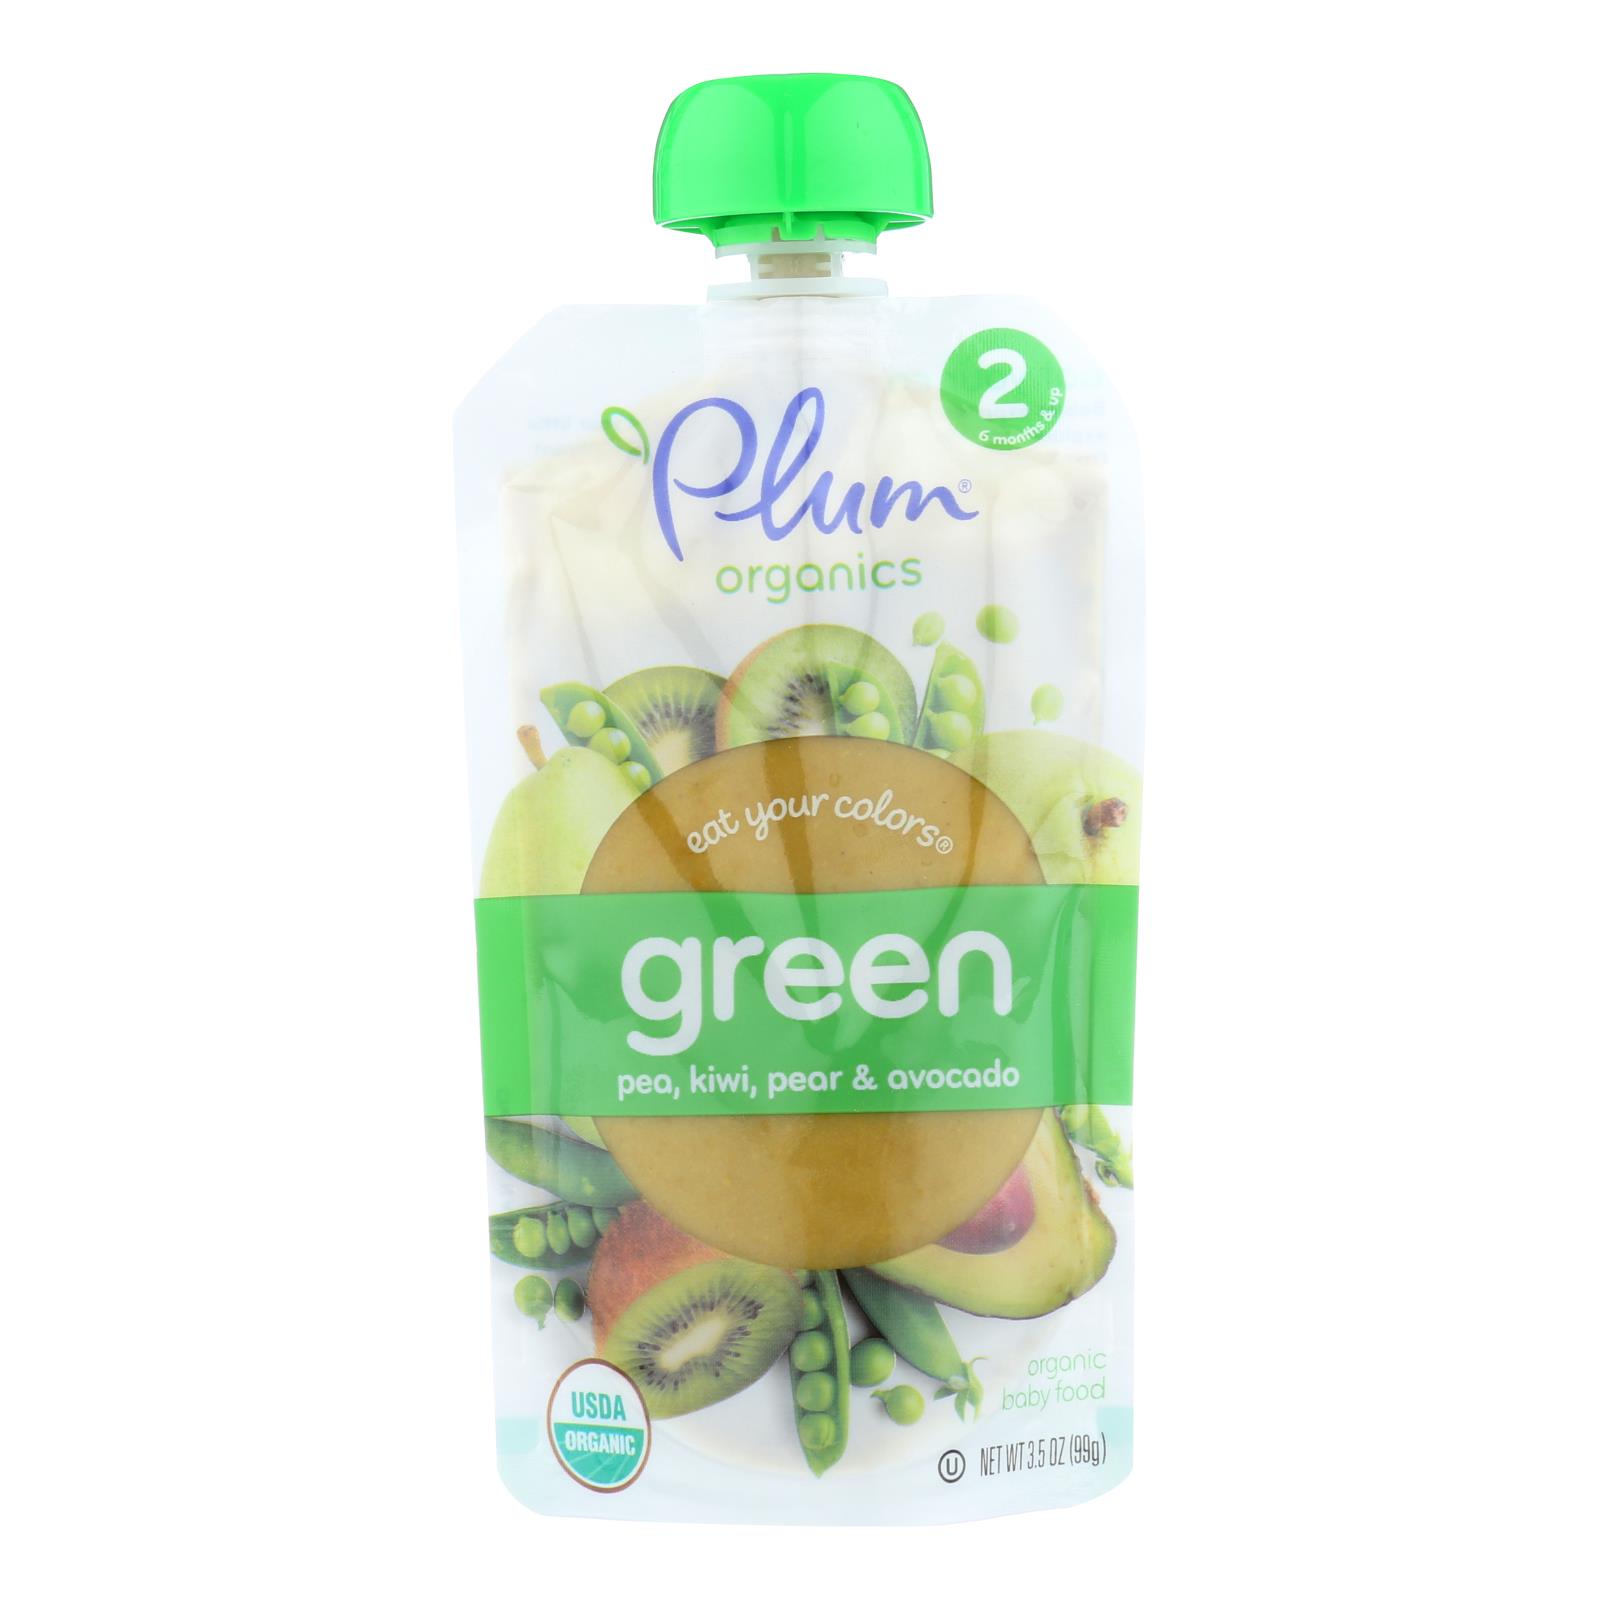 Plum Organics Green Pea, Kiwi, Pear And Avocado Baby Food - Case of 6 - 3.5 OZ